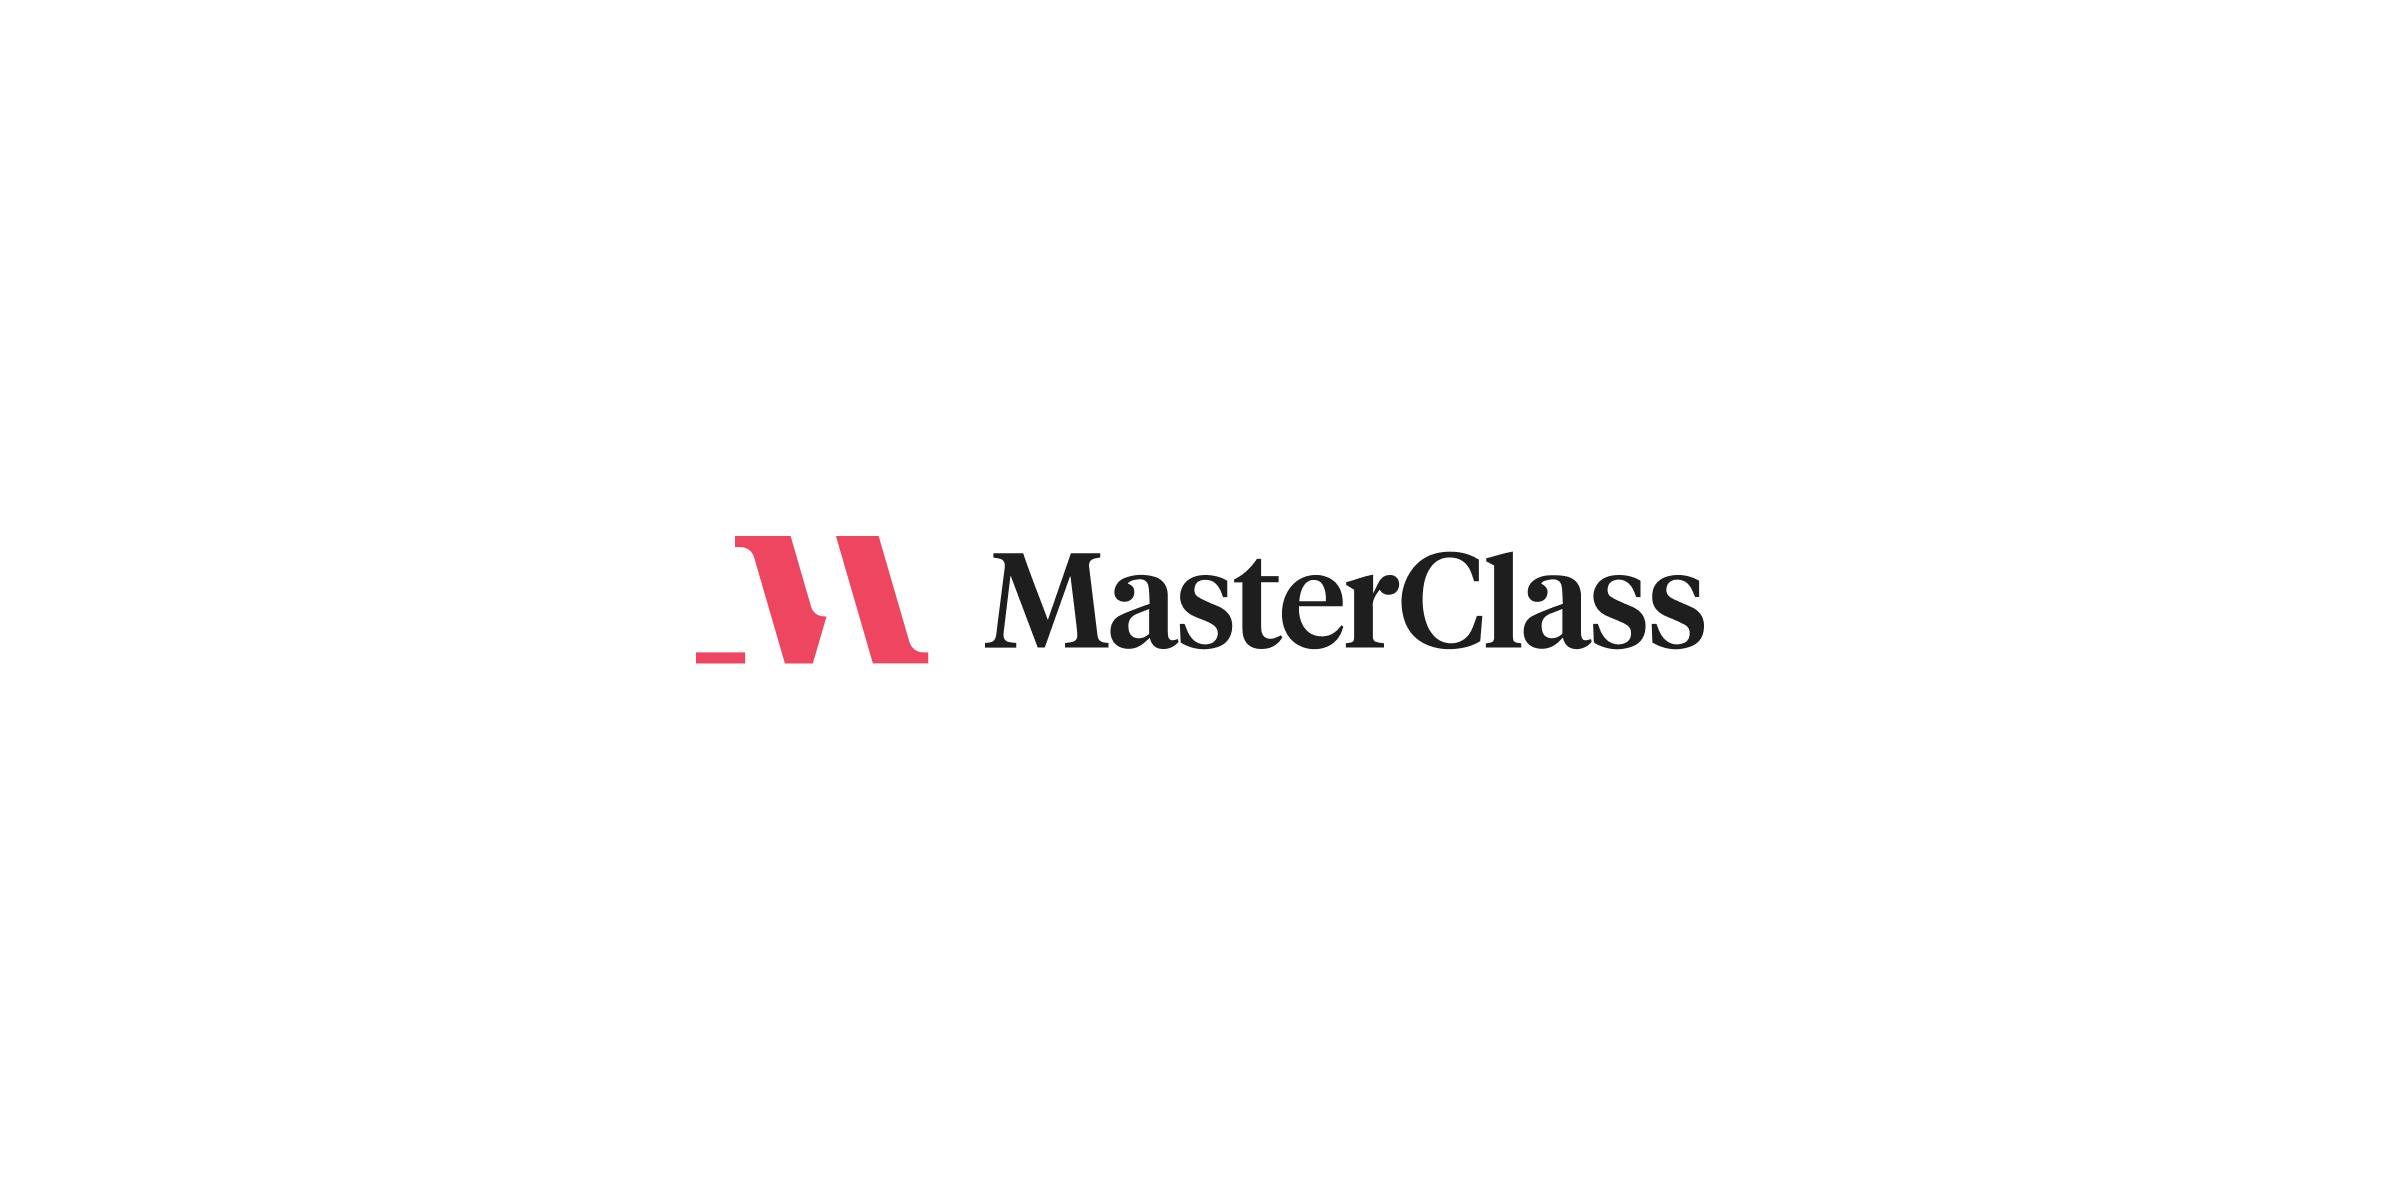 Report: MasterClass Business Breakdown & Founding Story